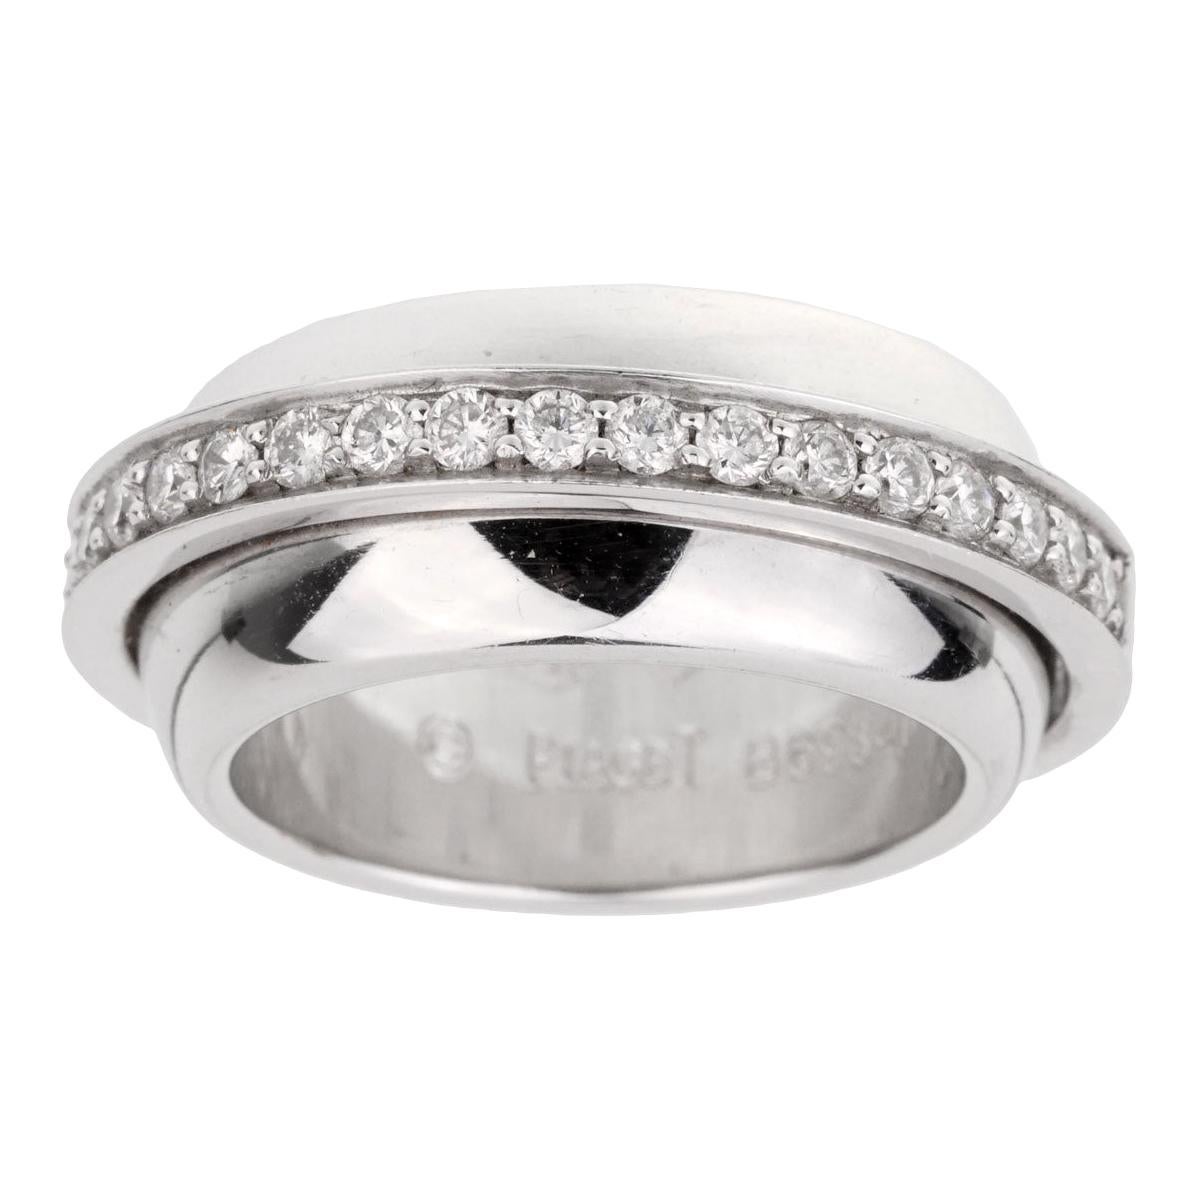 Piaget Possession White Gold Diamond Ring